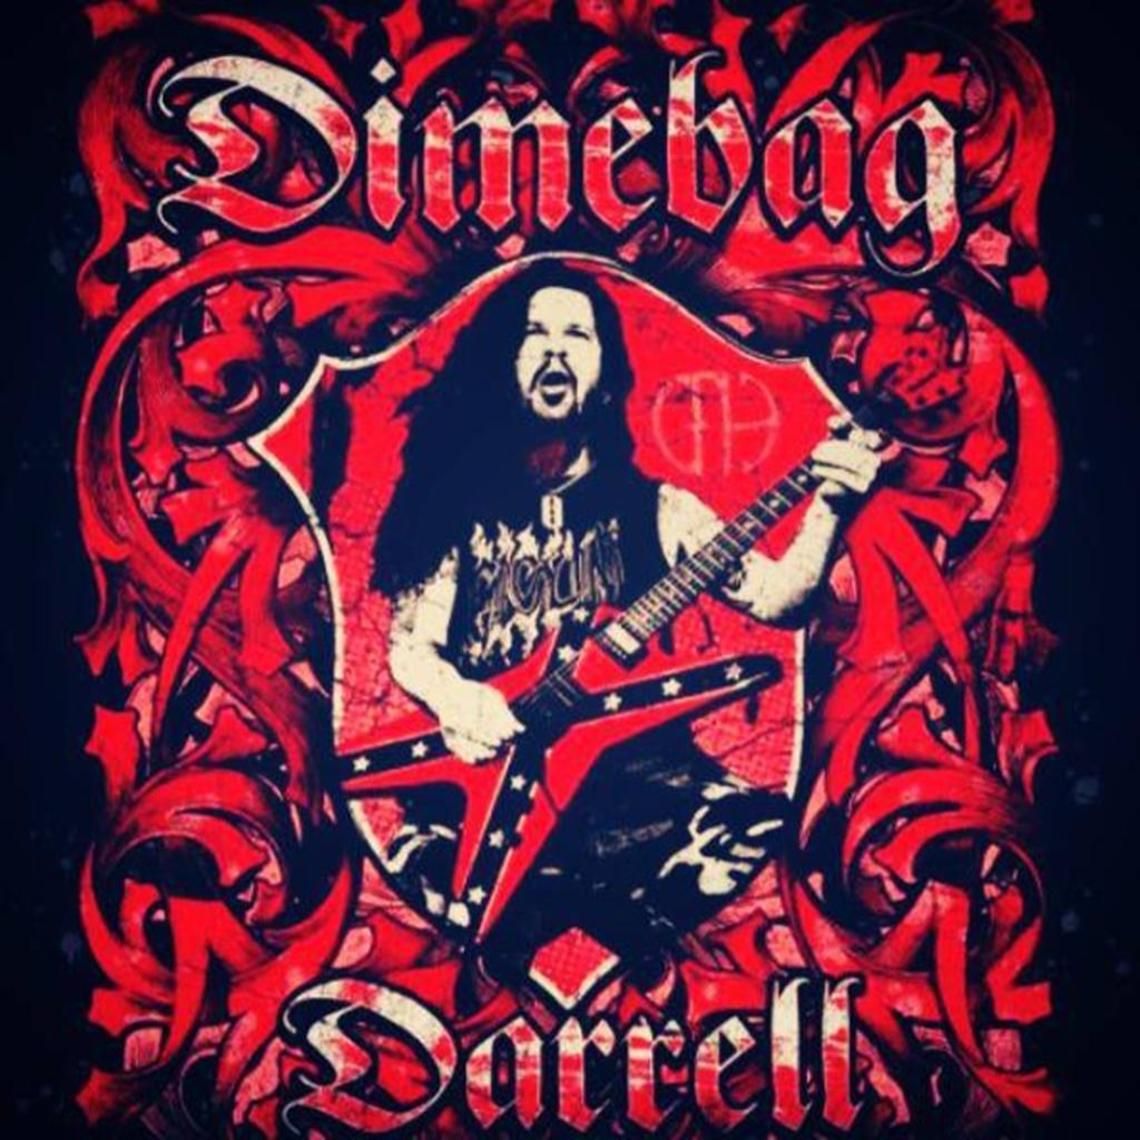 Dimebag Darrell. Dimebag darrell, Dimebag darrell wallpaper, Heavy metal